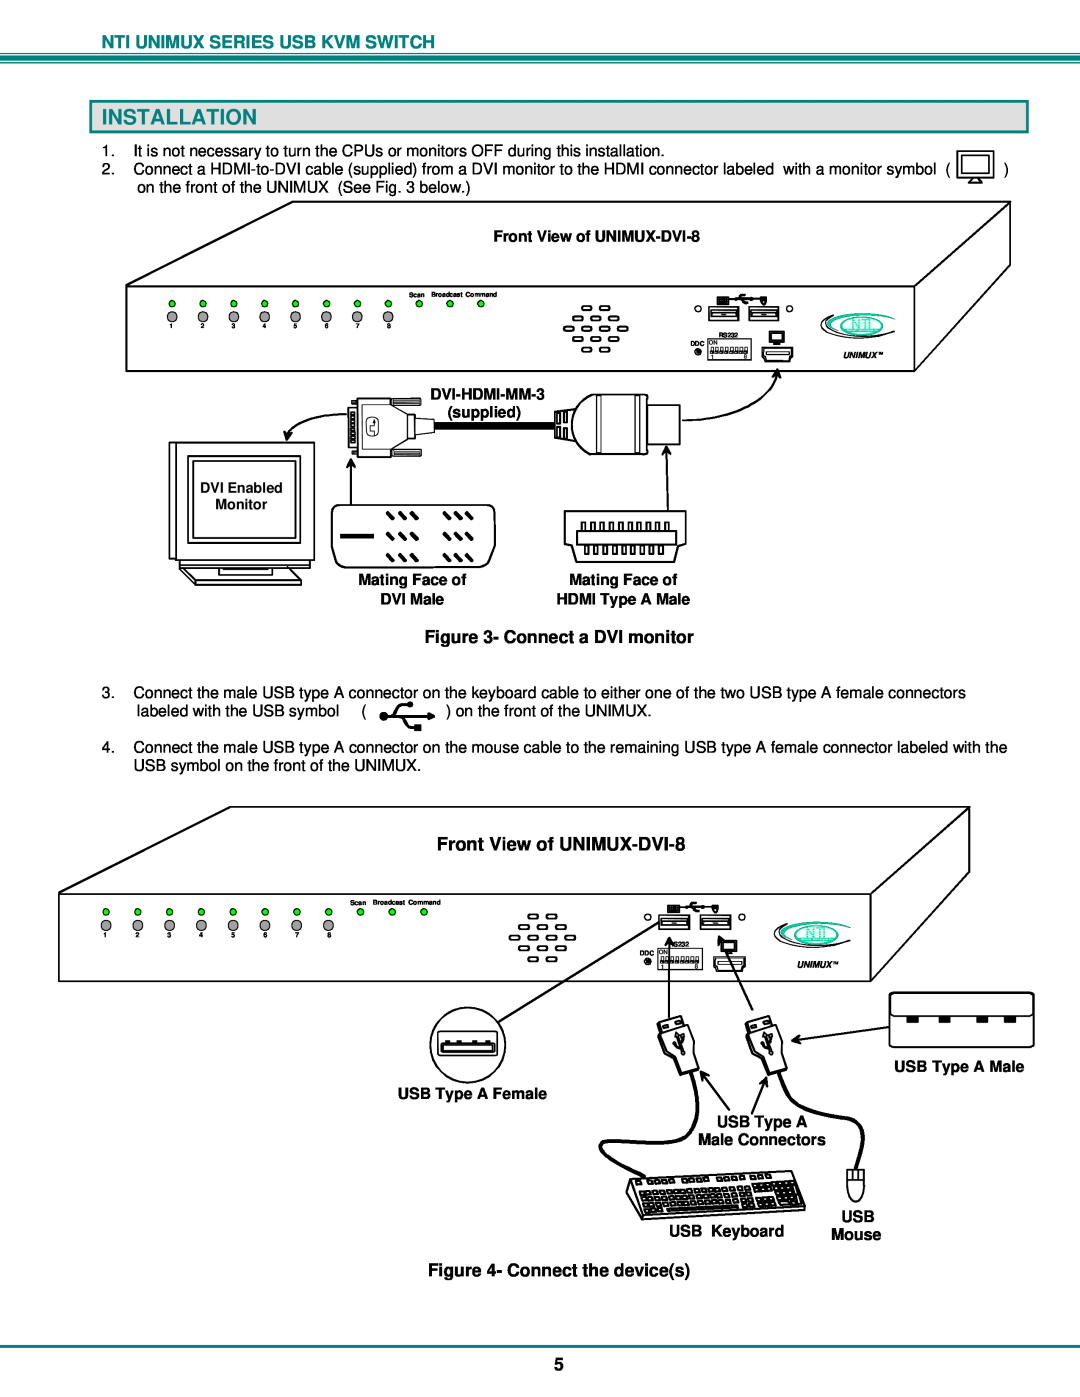 Network Technologies DVI-x Installation, Front View of UNIMUX-DVI-8, Nti Unimux Series Usb Kvm Switch, Connect the devices 